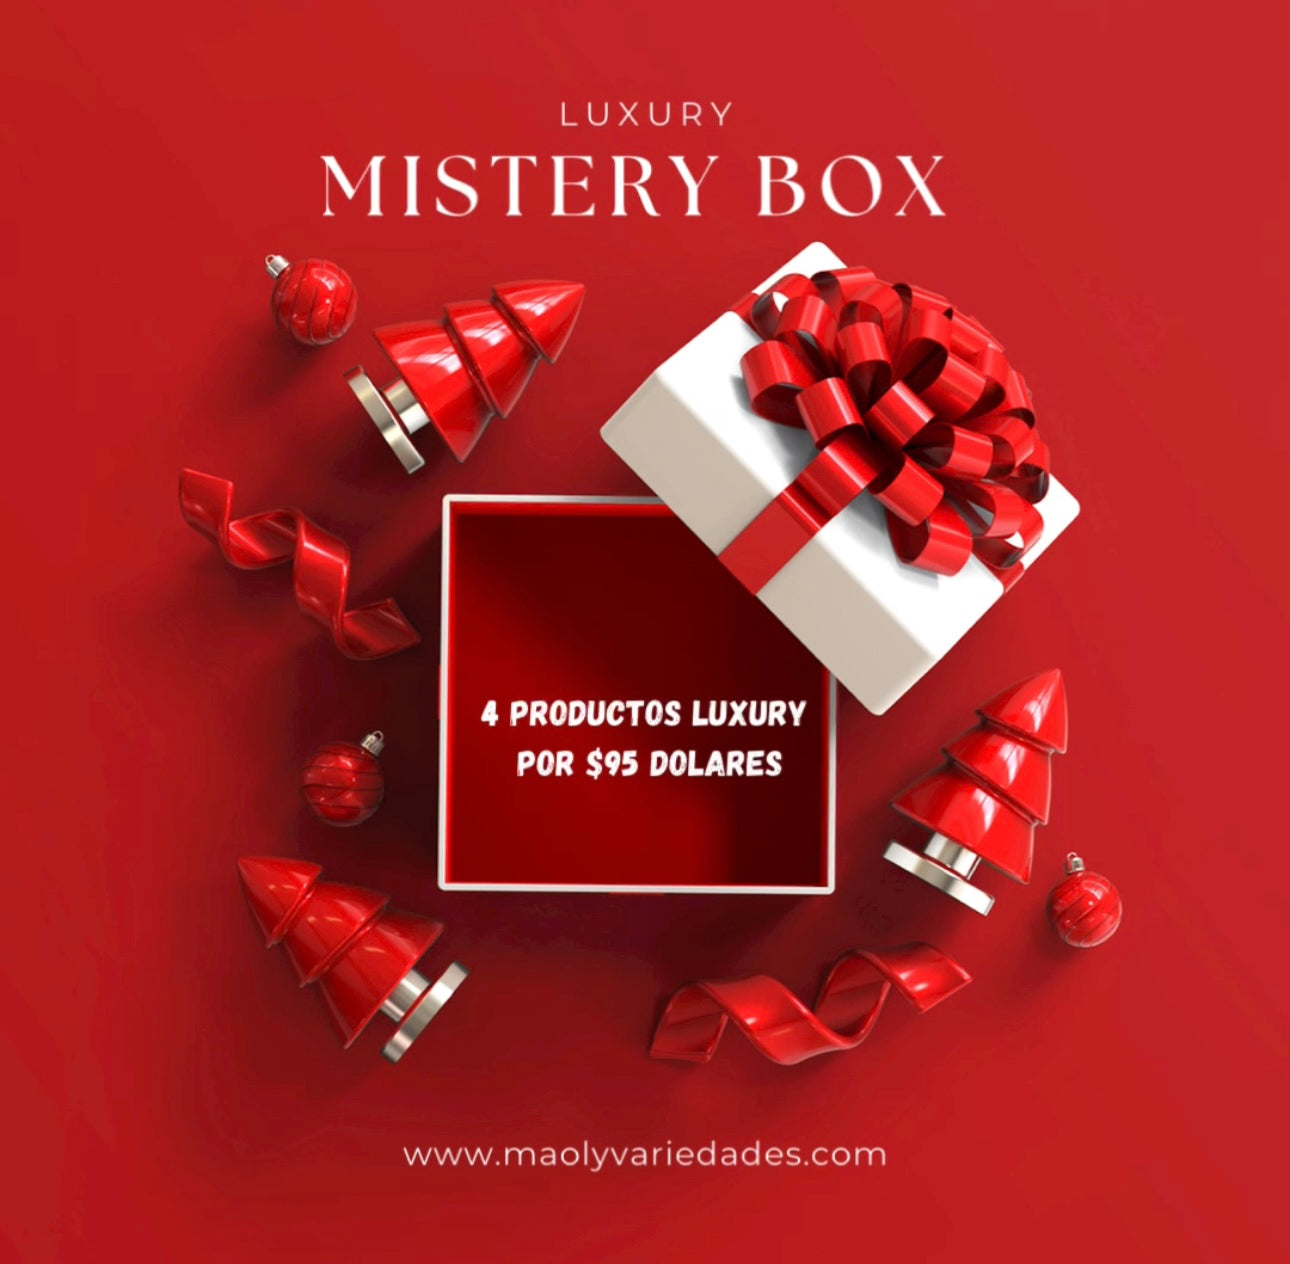 Luxury box edición limitada